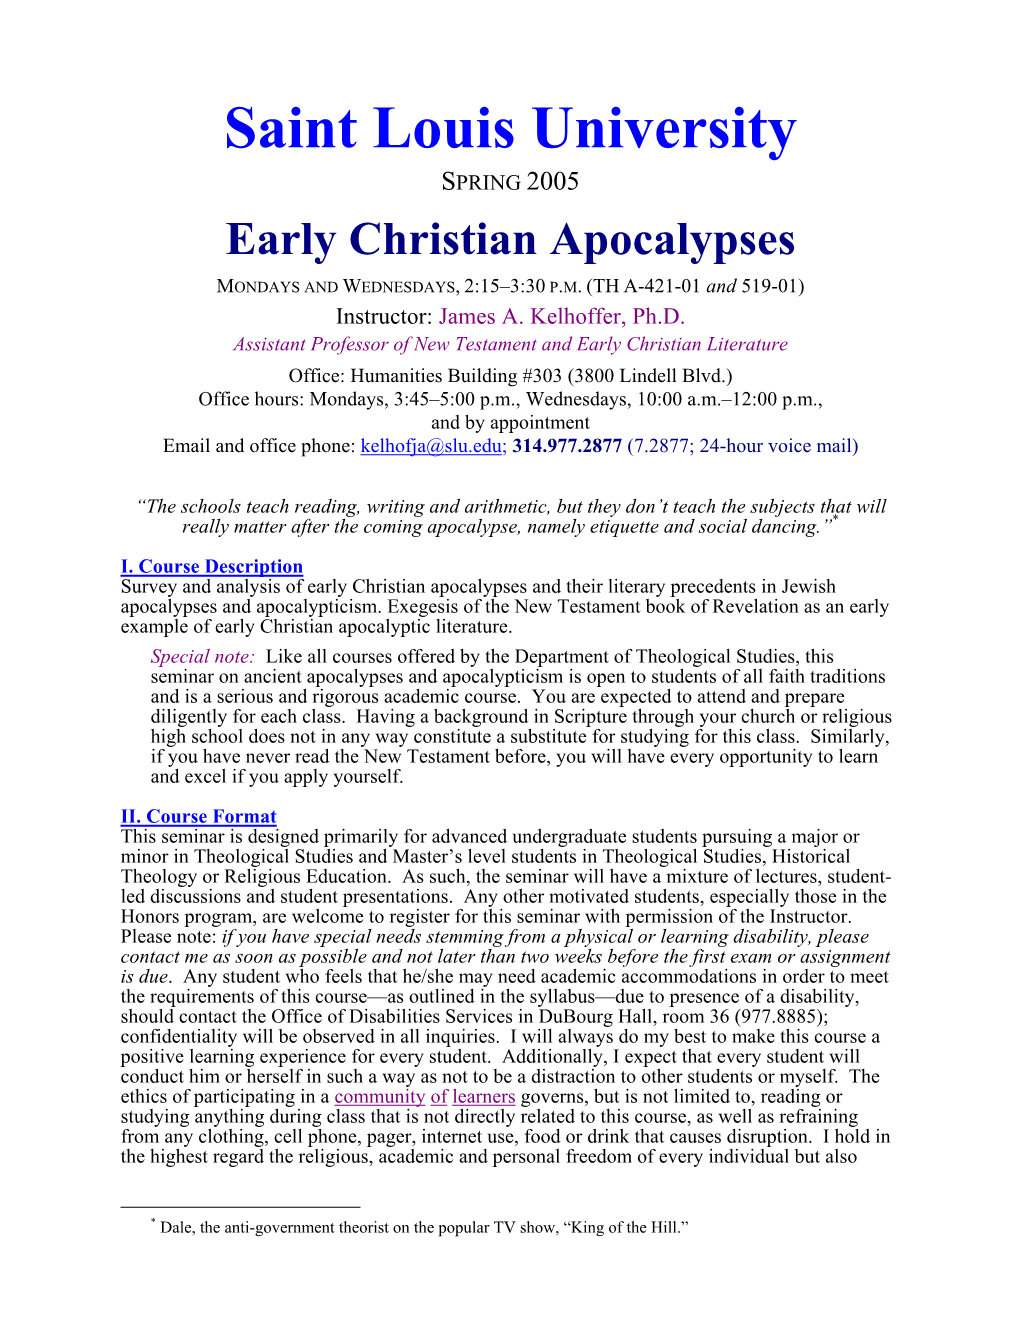 Early Christian Apocalypses